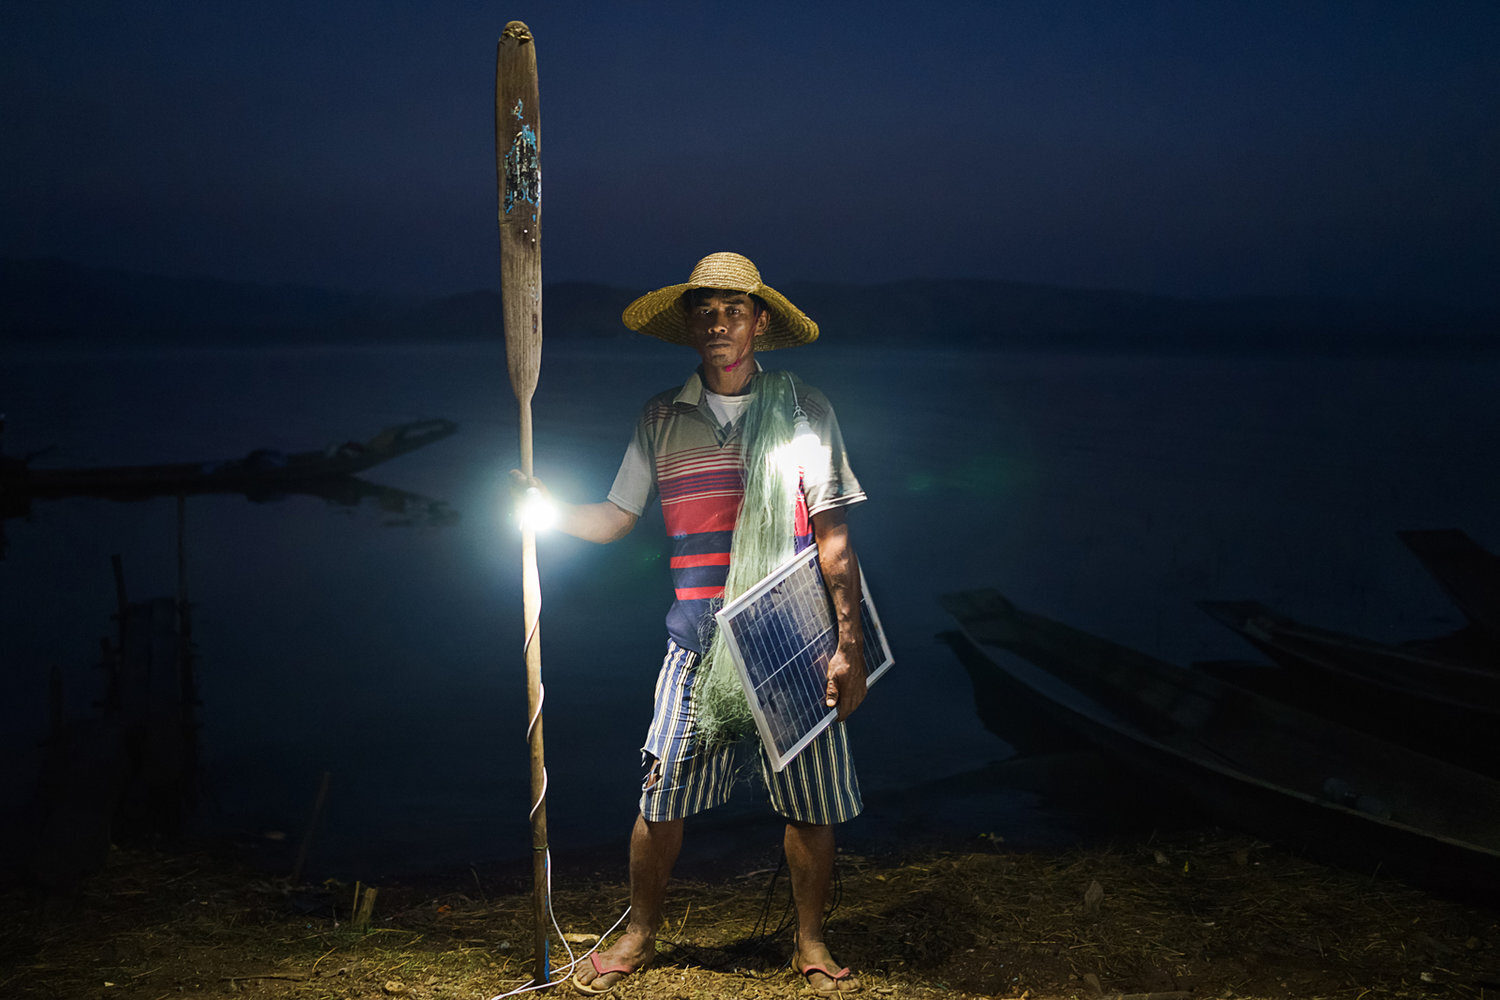  RUBÉN SALGADO ESCUDERO,  SOLAR PORTRAITS  - MYANMAR 